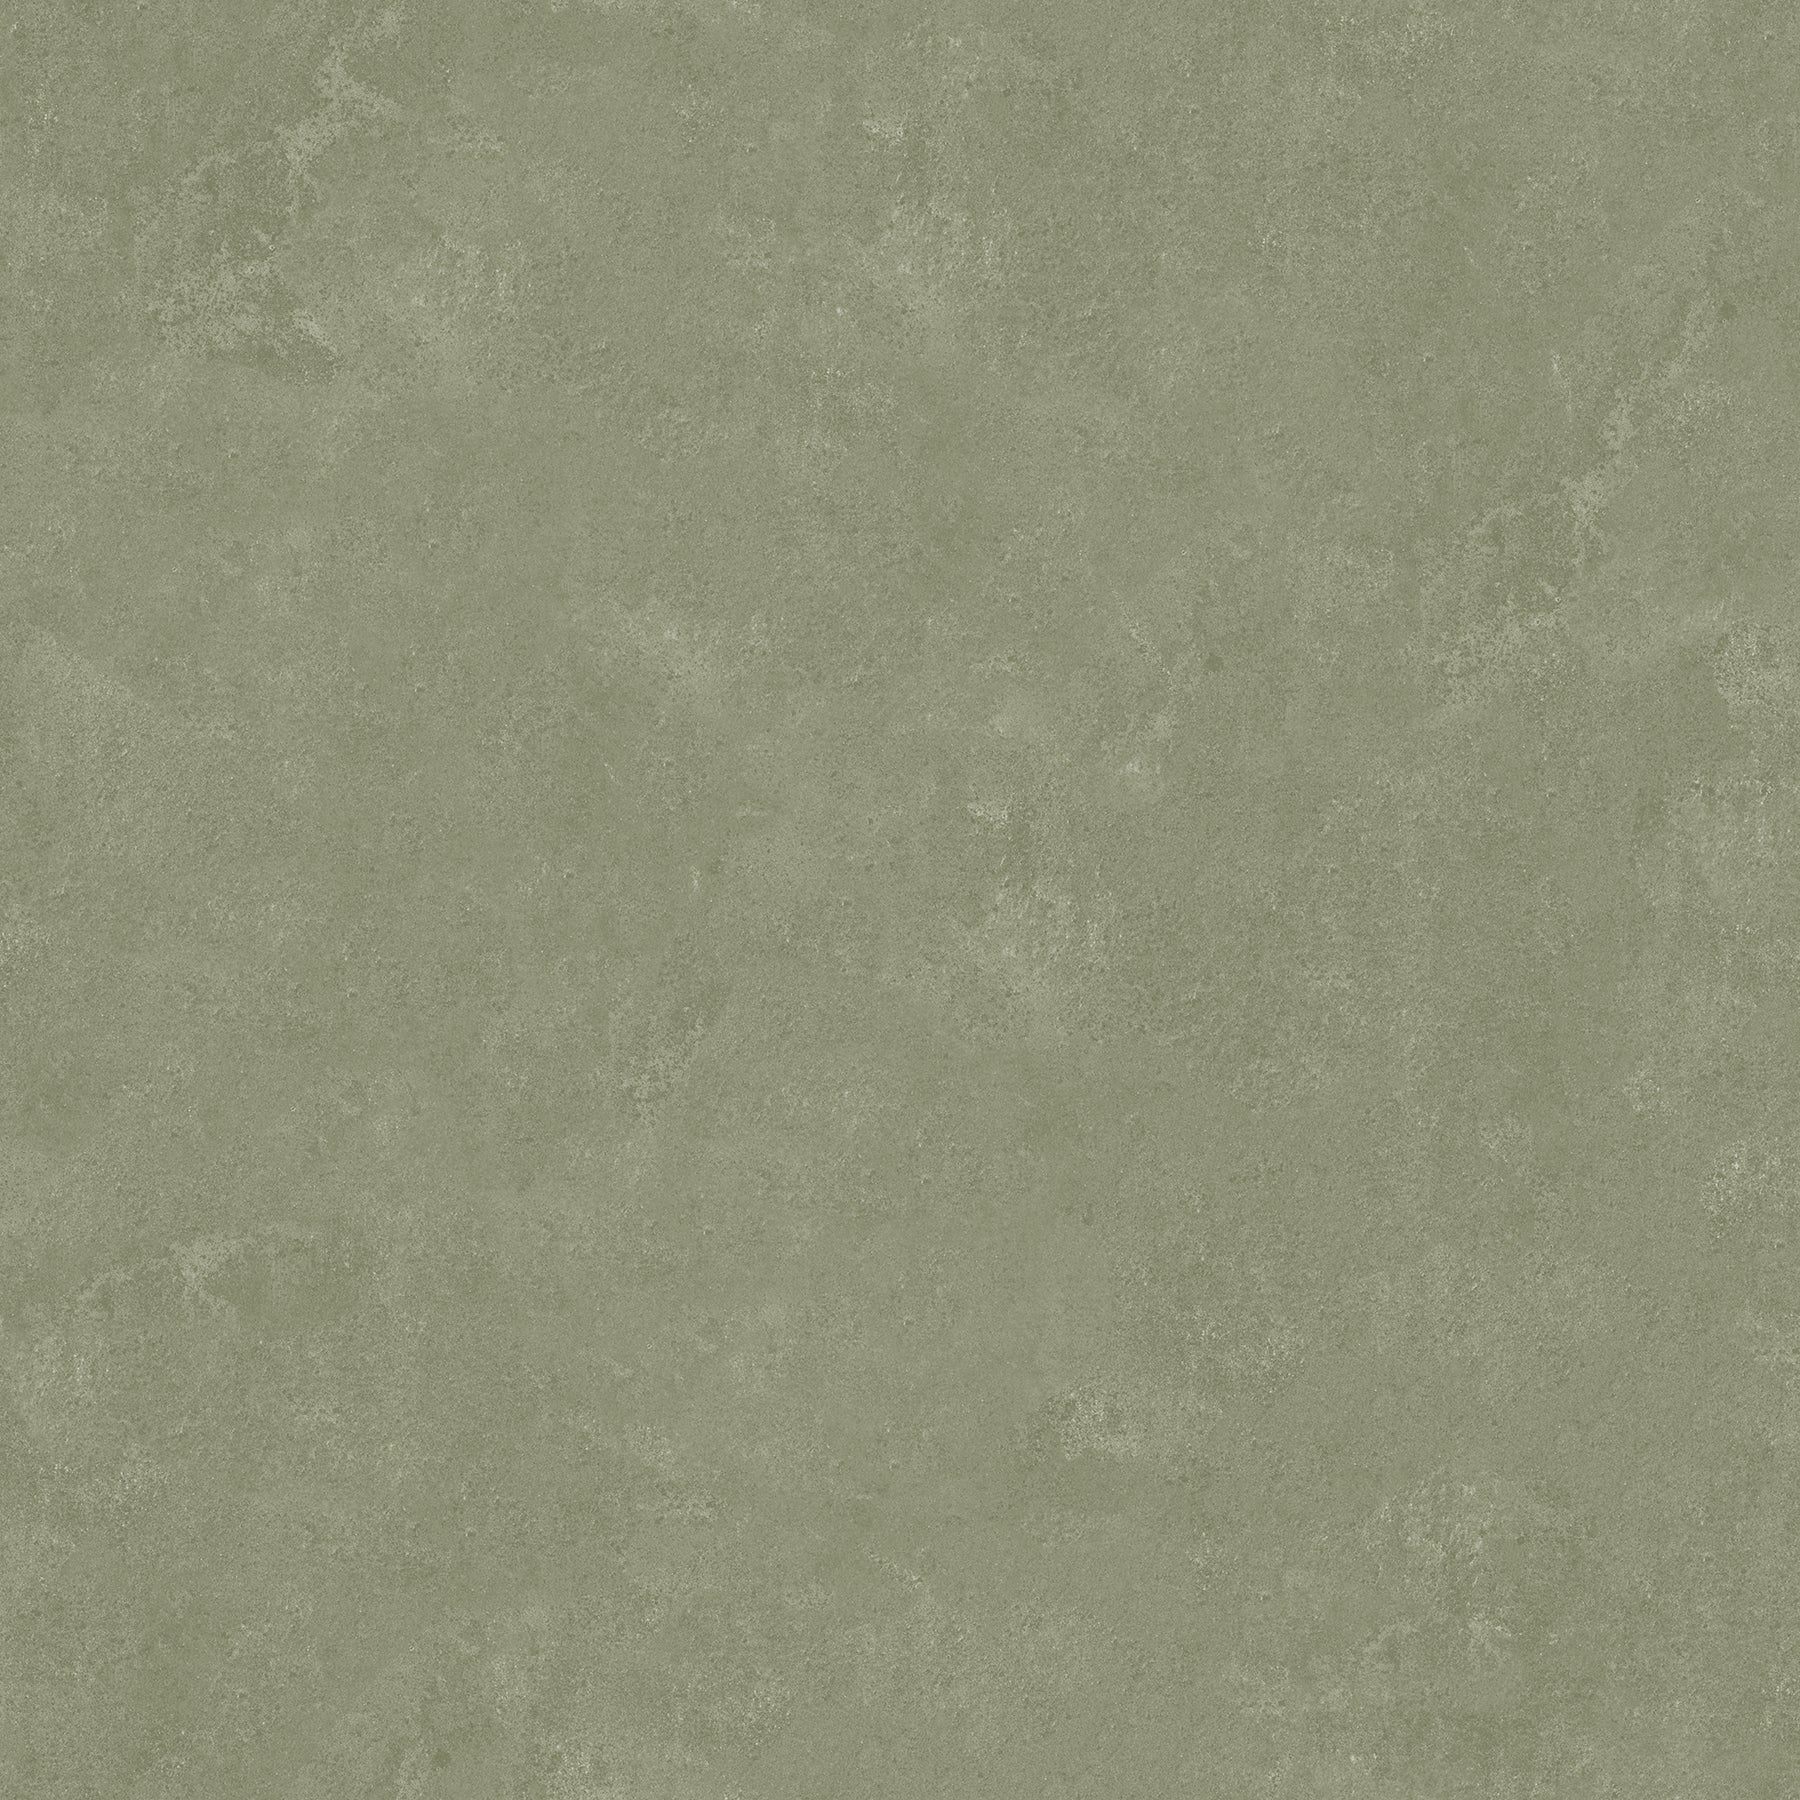 Mr. Kate Daphne Limewash Peel and Stick Wallpaper Peel and Stick Wallpaper RoomMates Decor Roll Olive Green 